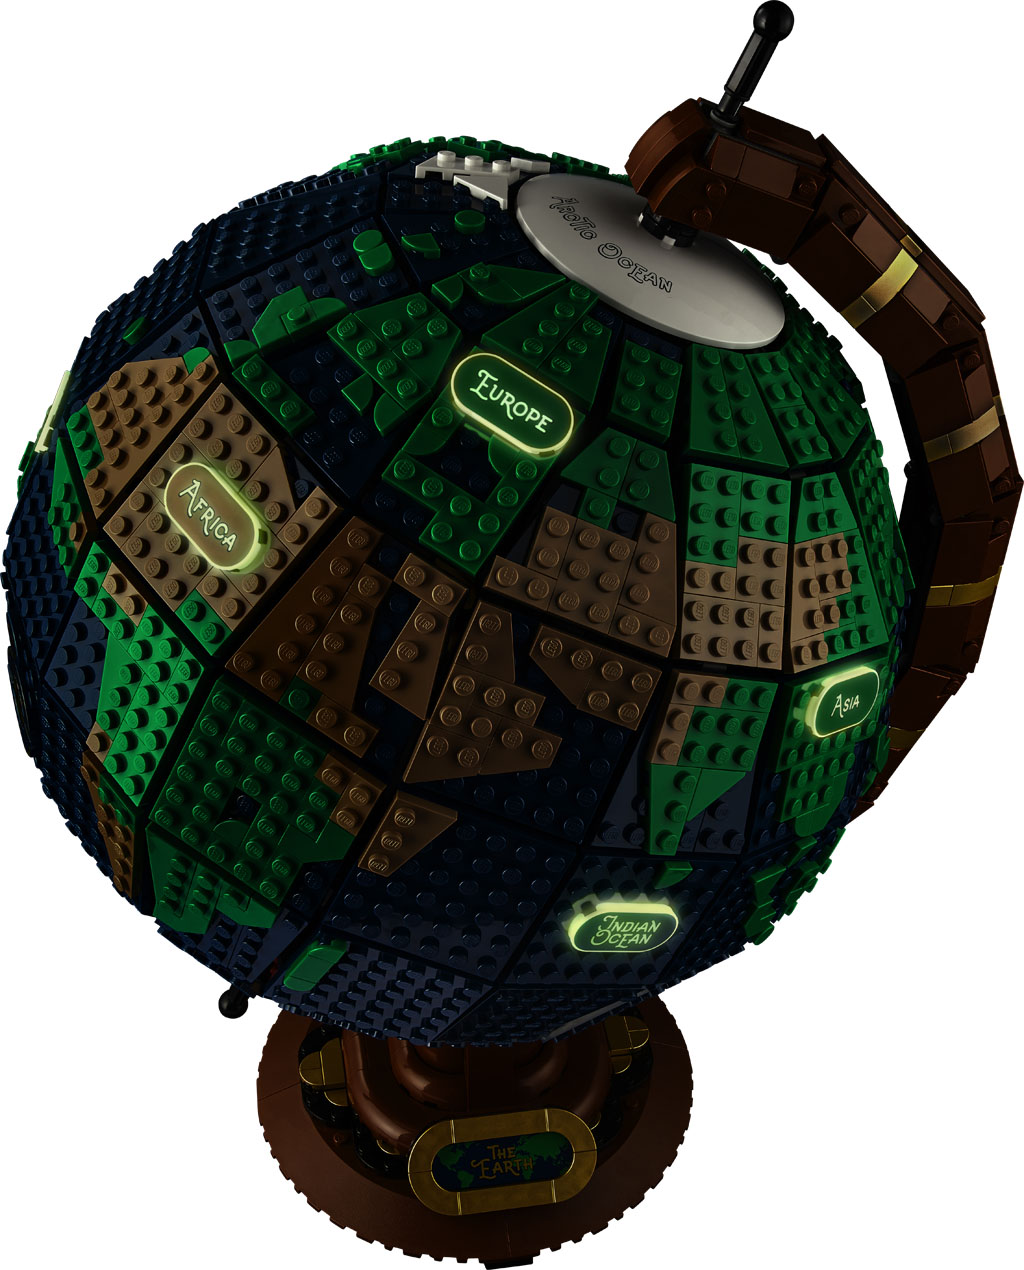 LEGO Ideas 21332 The Globe : l'annonce officielle - Brickonaute